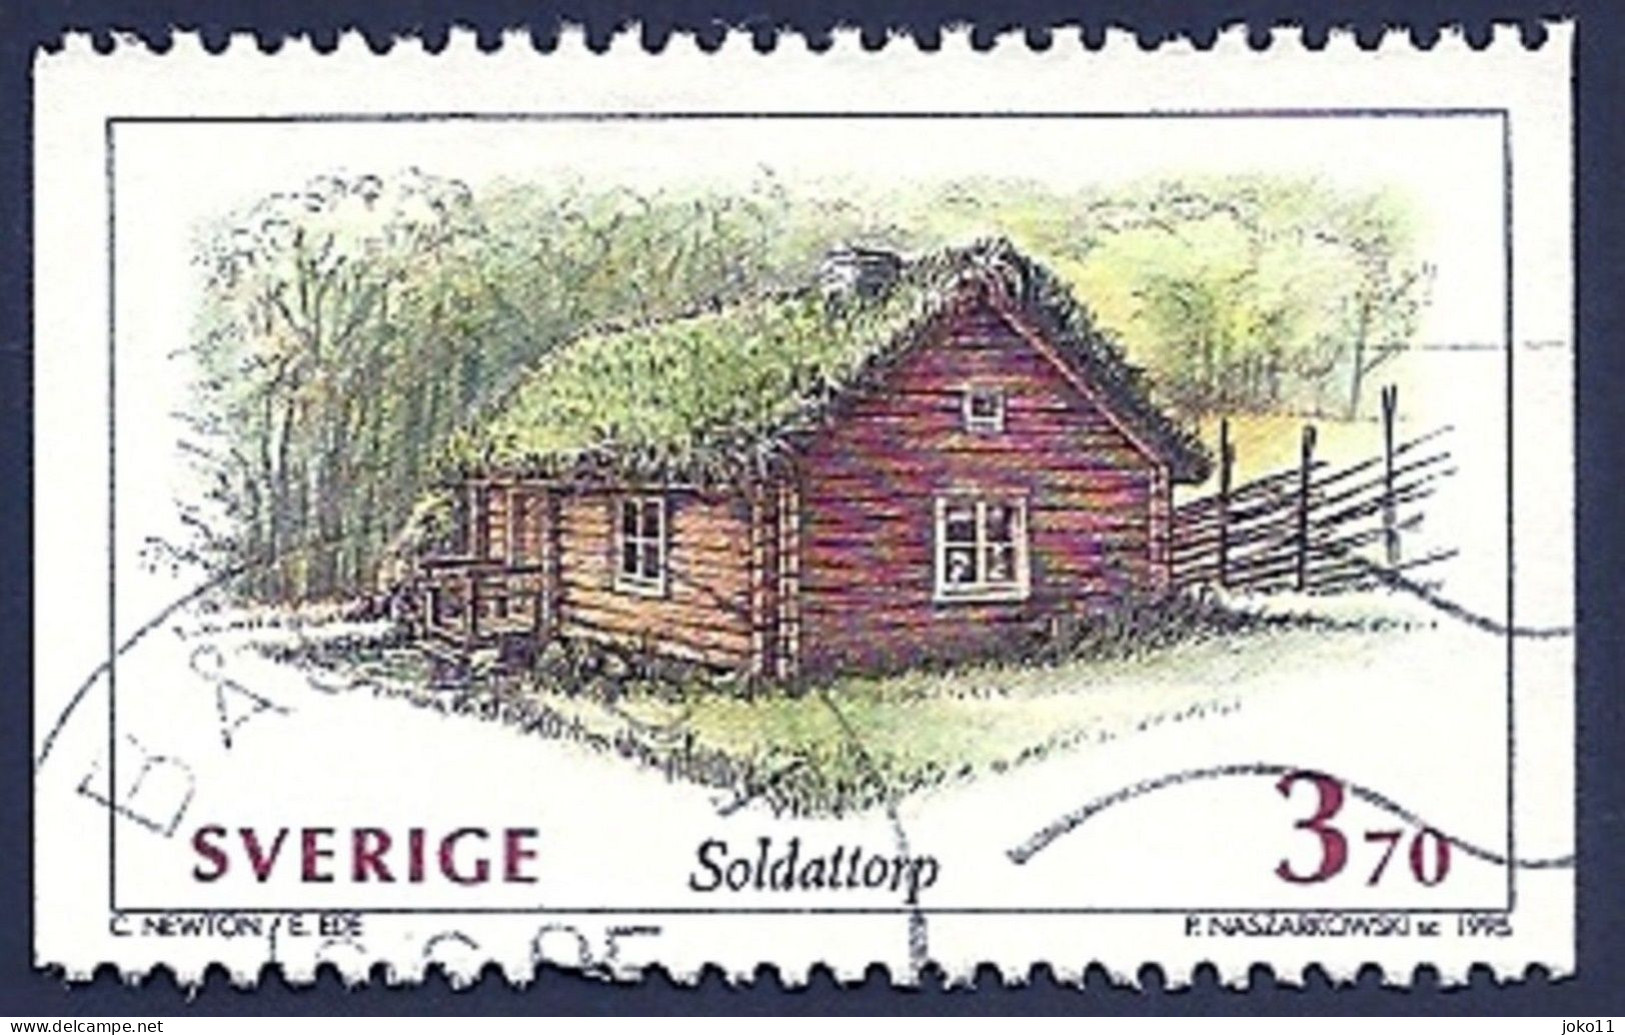 Schweden, 1995, Michel-Nr. 1870, Gestempelt - Used Stamps